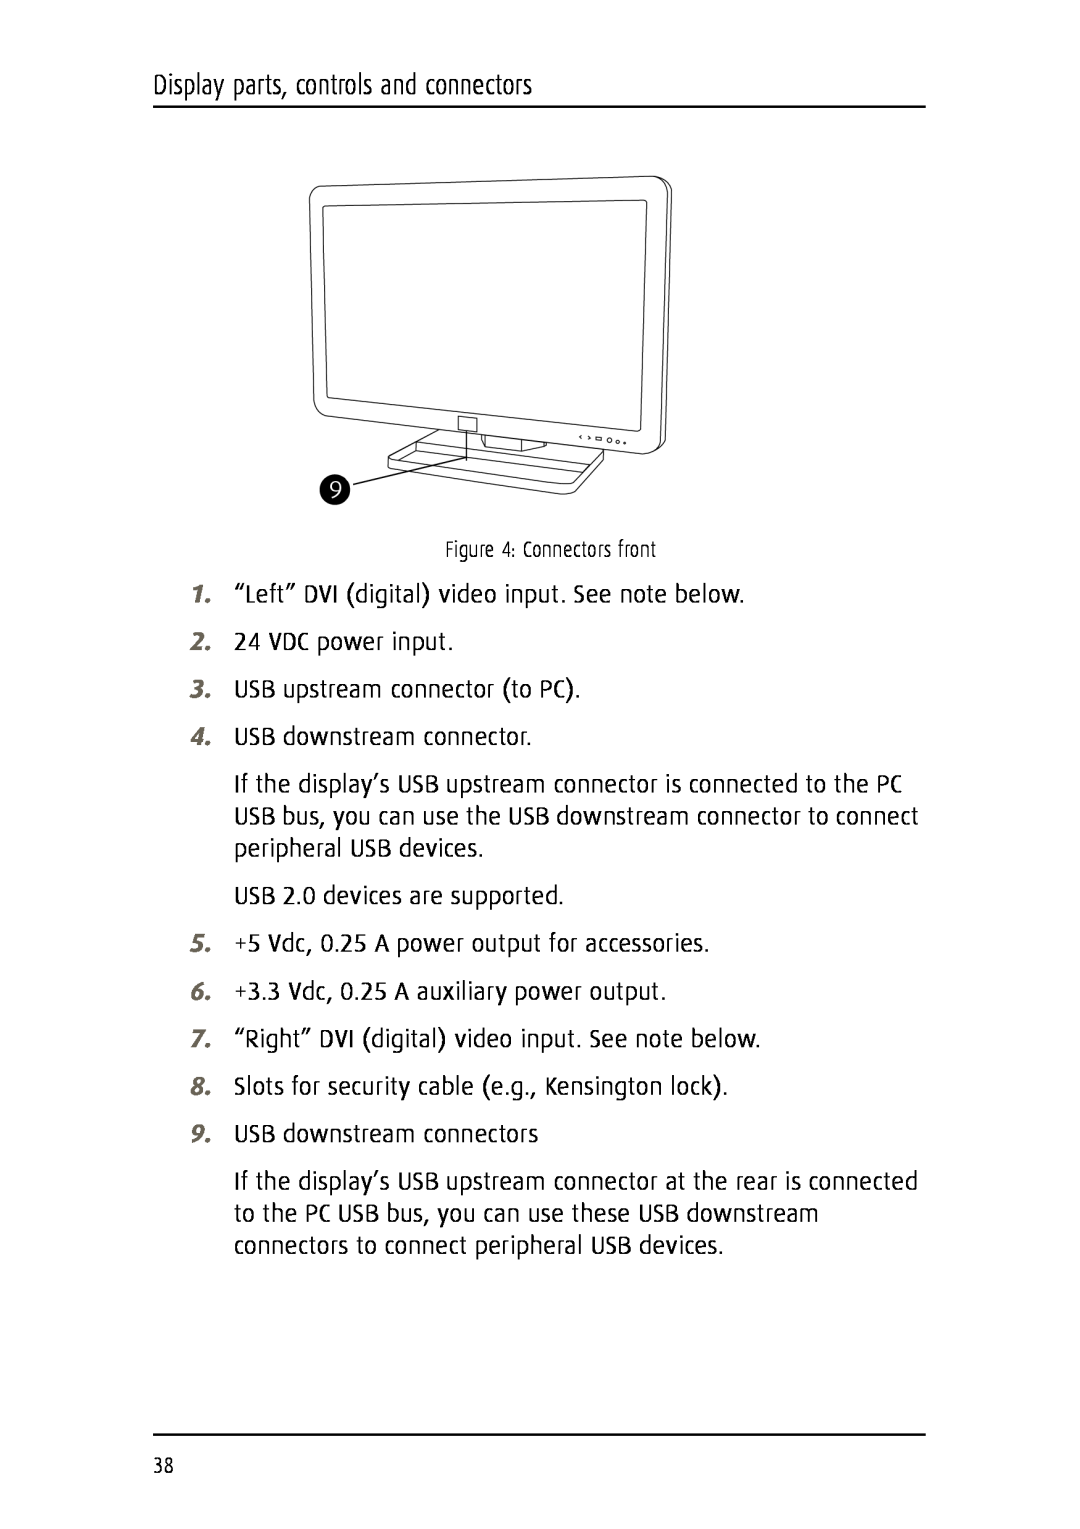 Barco MDCC 6130 manual Display parts, controls and connectors, 1. “Left” DVI digital video input. See note below 